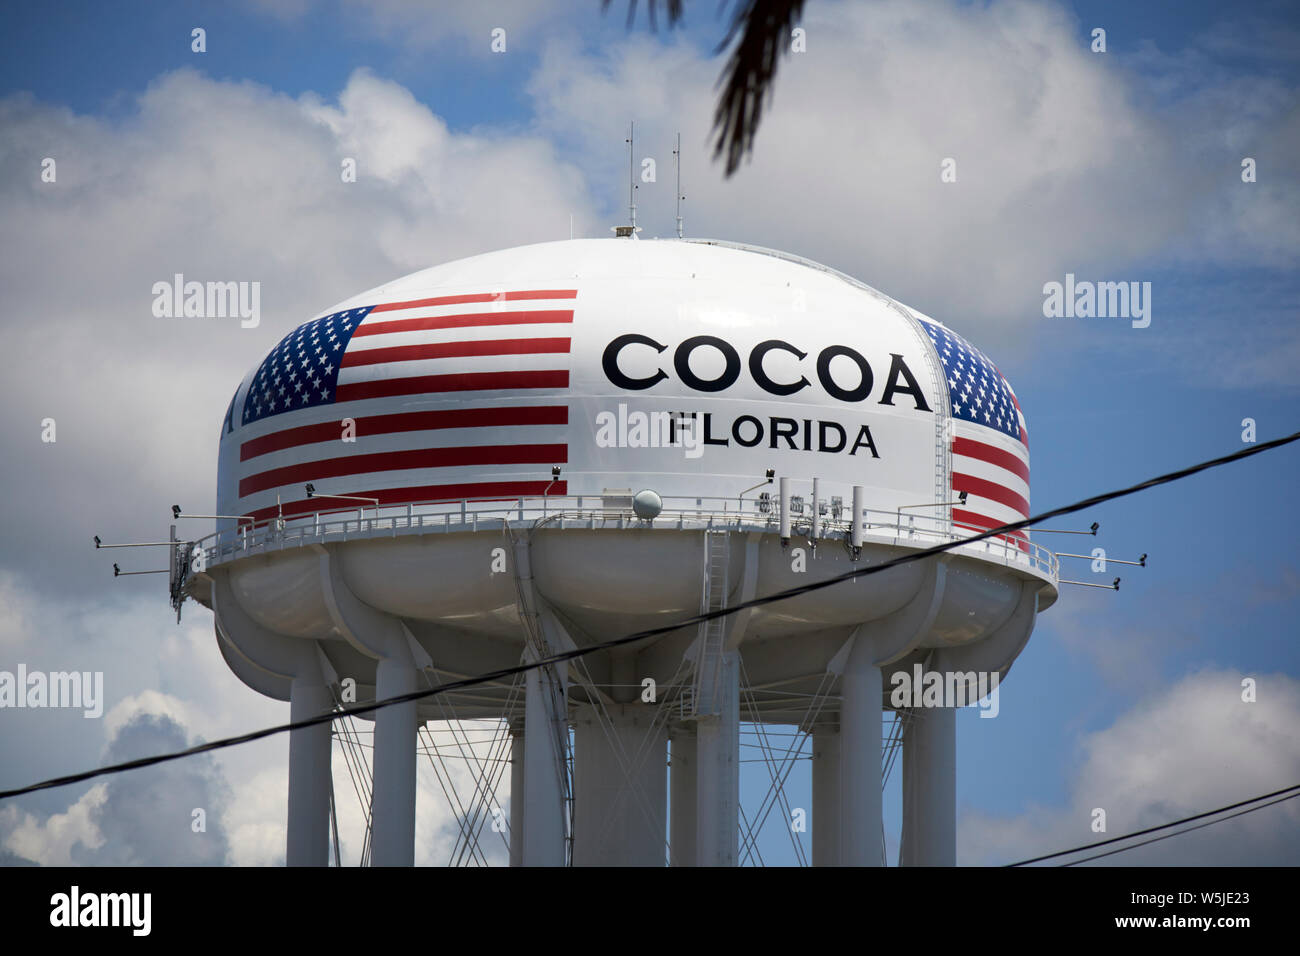 Torre de agua en Cocoa florida con una gran bandera estadounidense FLORIDA, ESTADOS UNIDOS DE AMÉRICA Foto de stock